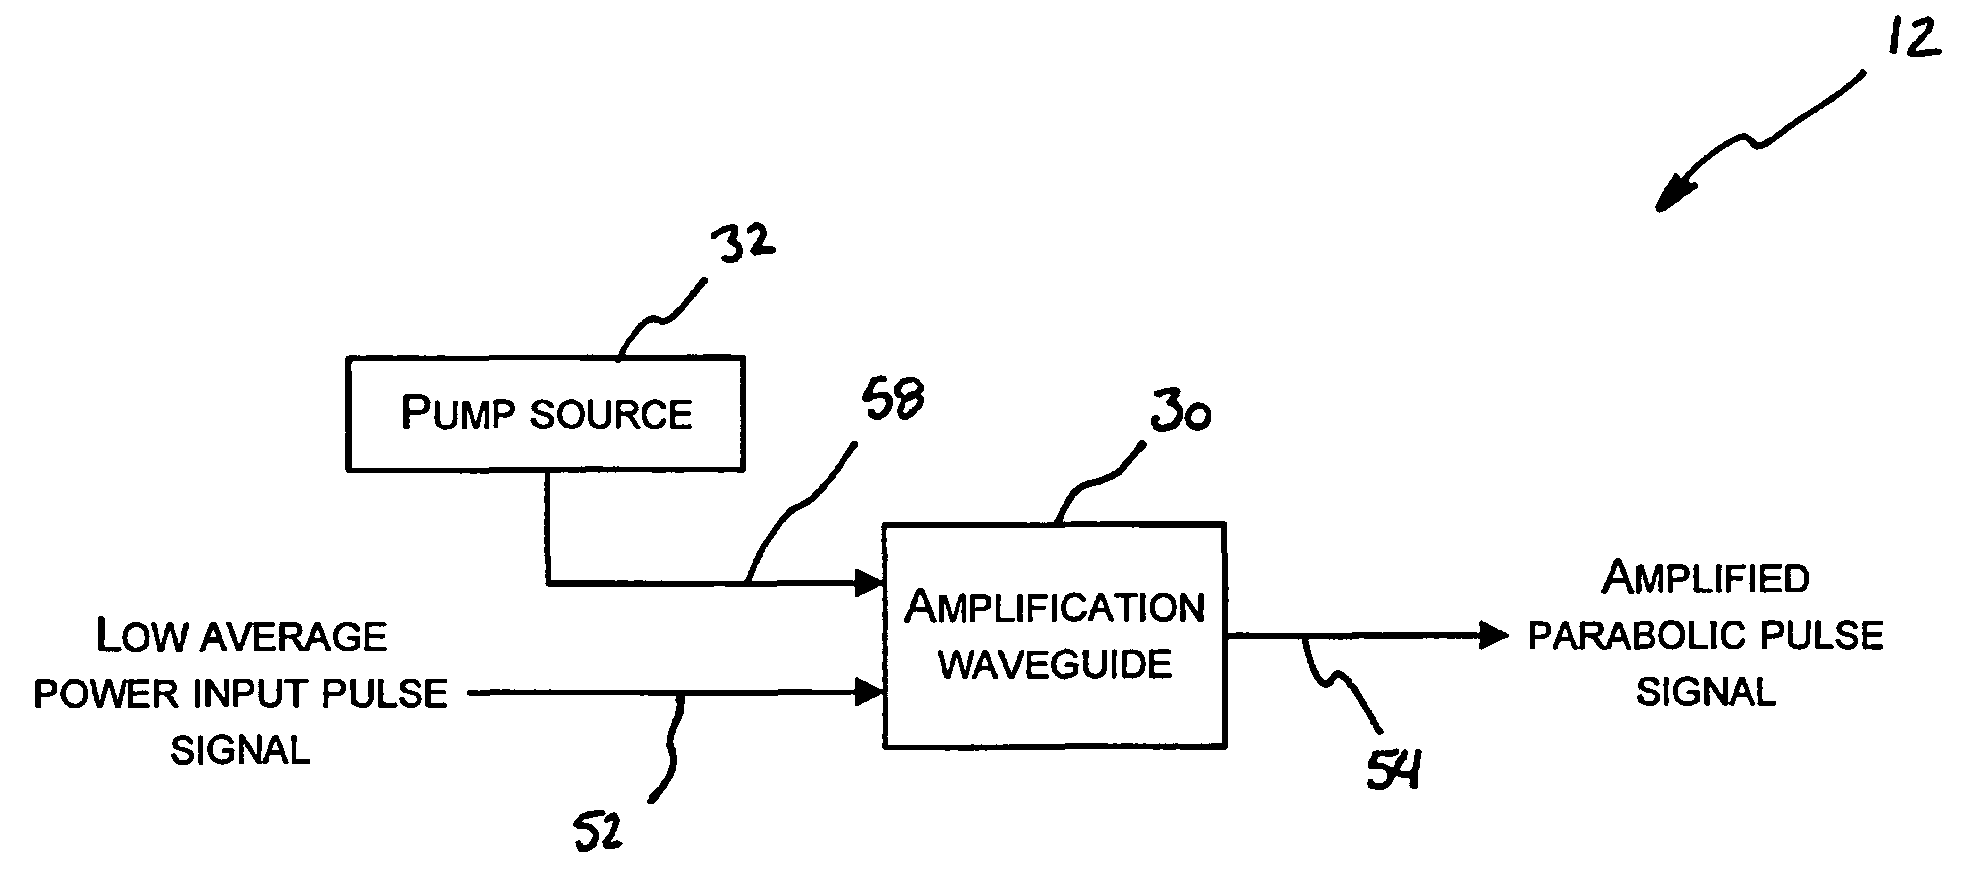 Low-average-power parabolic pulse amplification